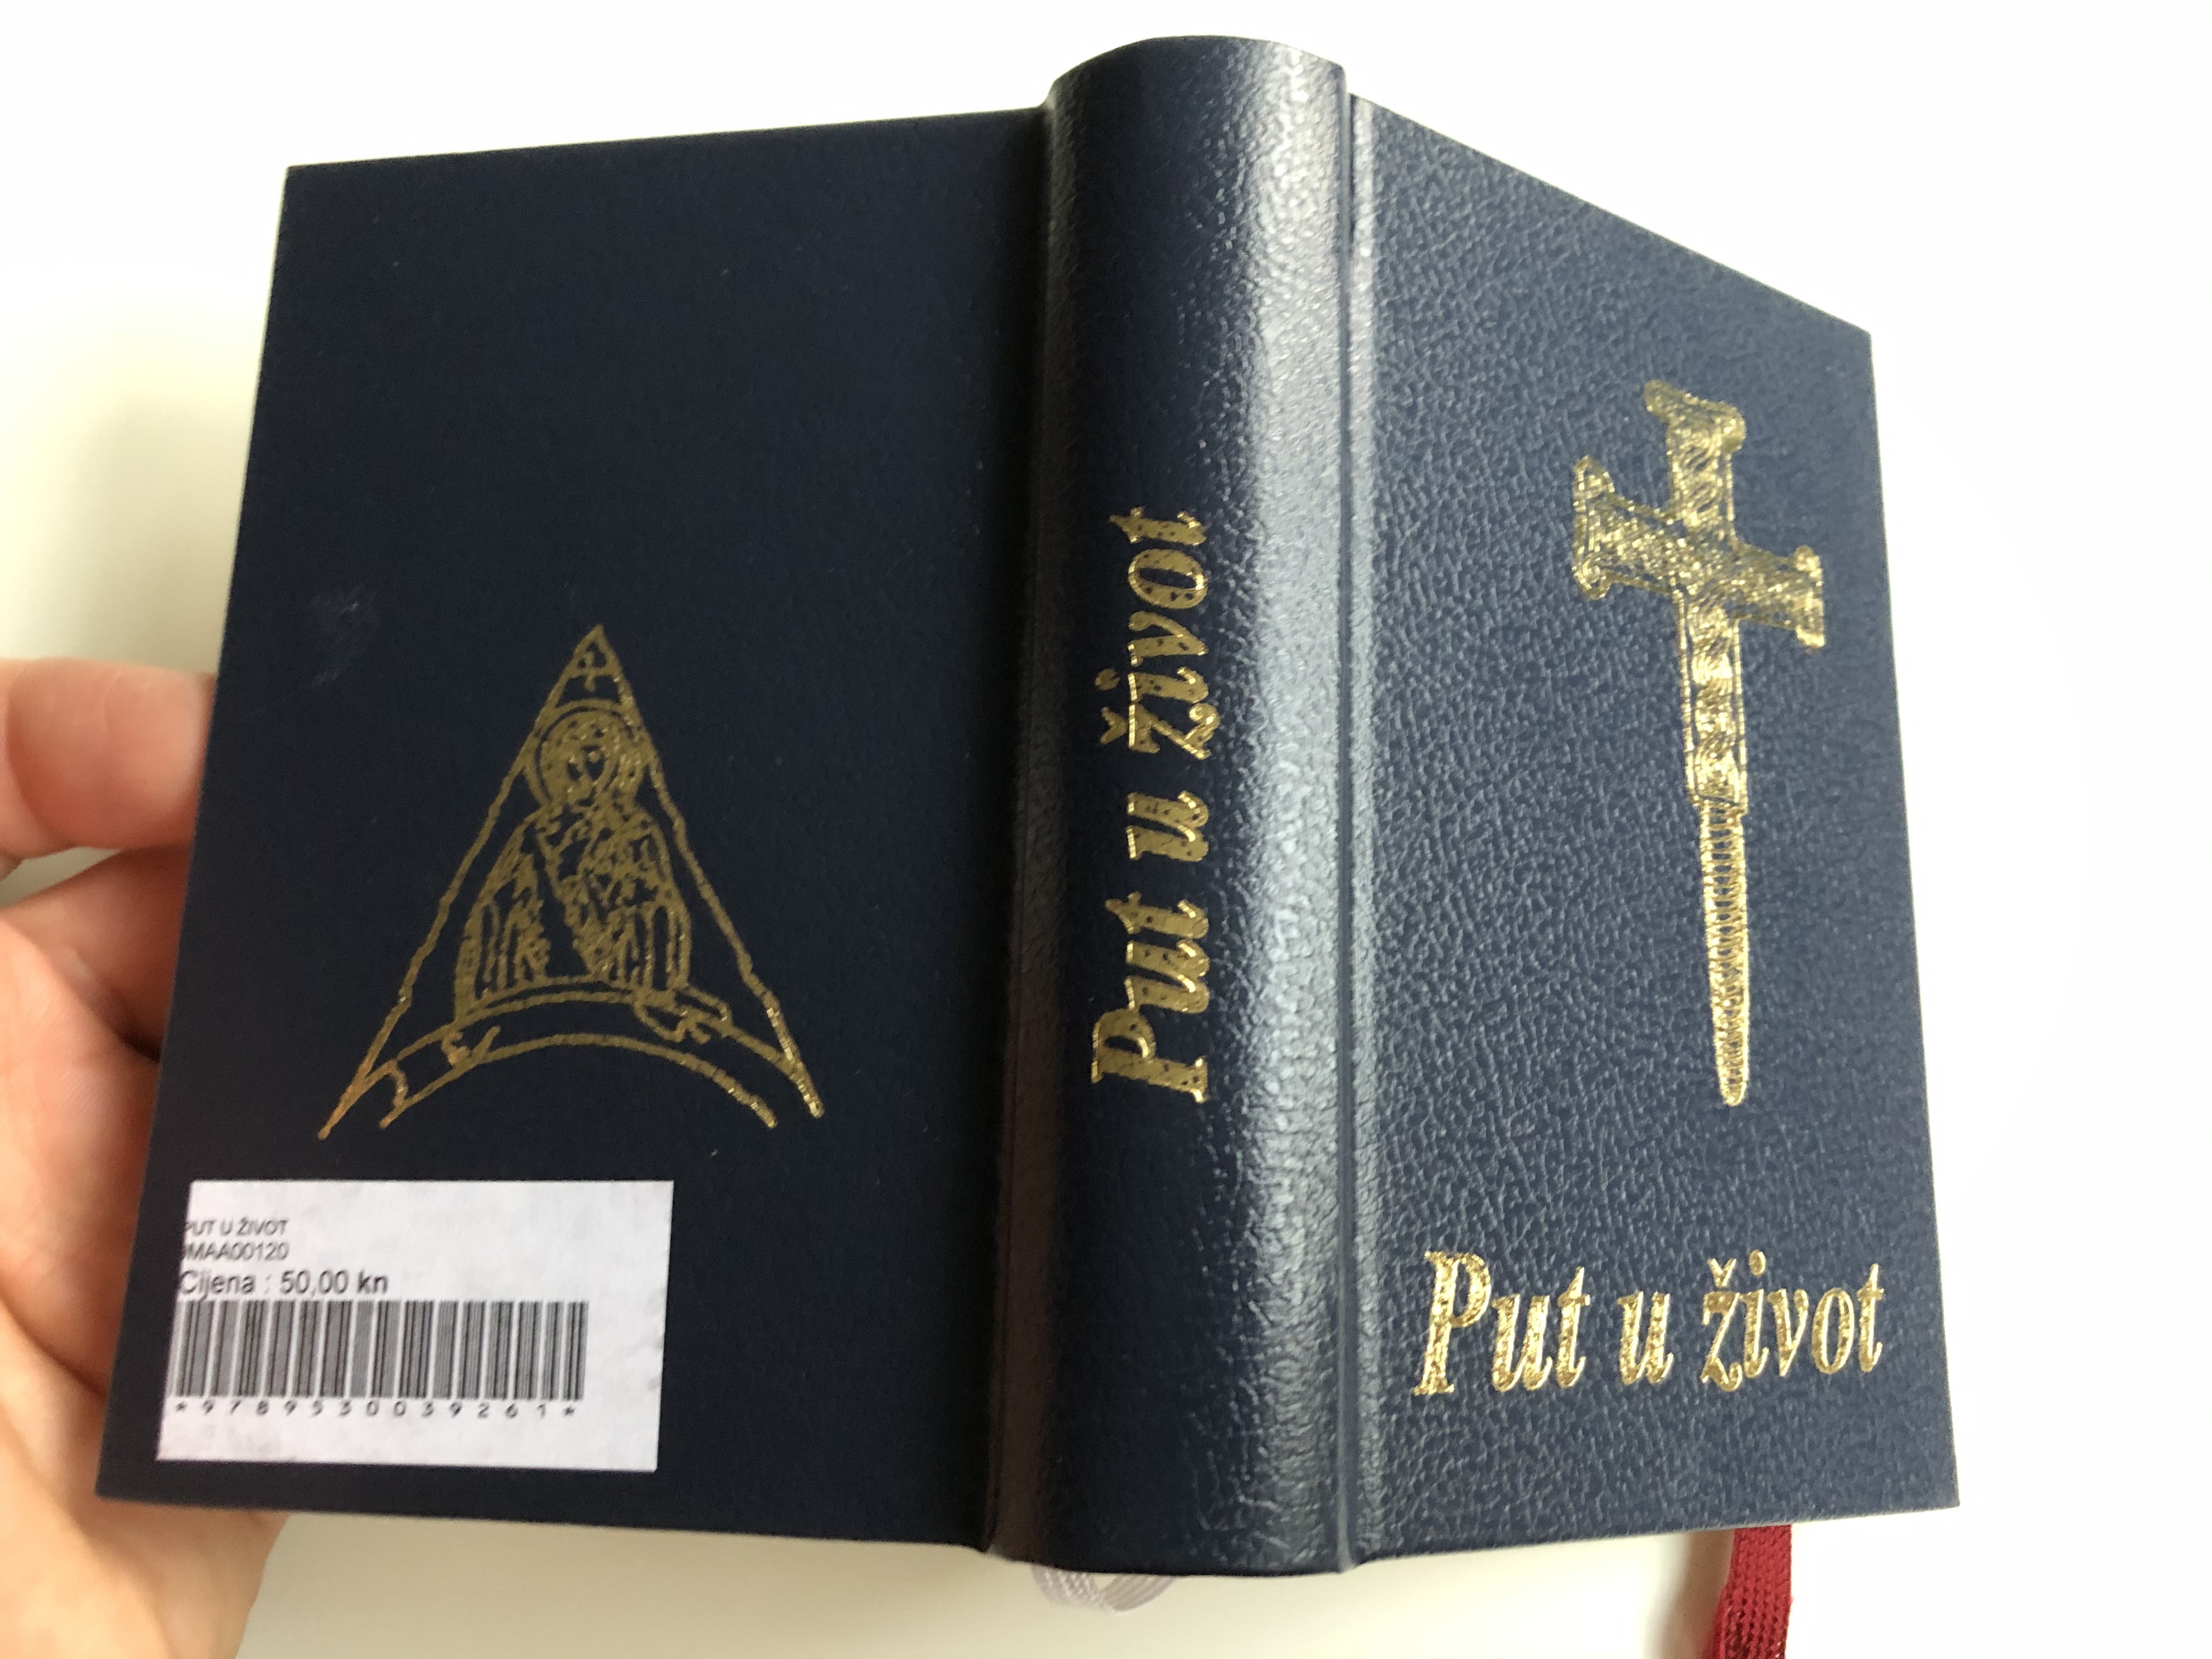 put-u-ivot-way-of-life-prayer-and-rites-9th-amended-edition-hardcover-black-14.jpg